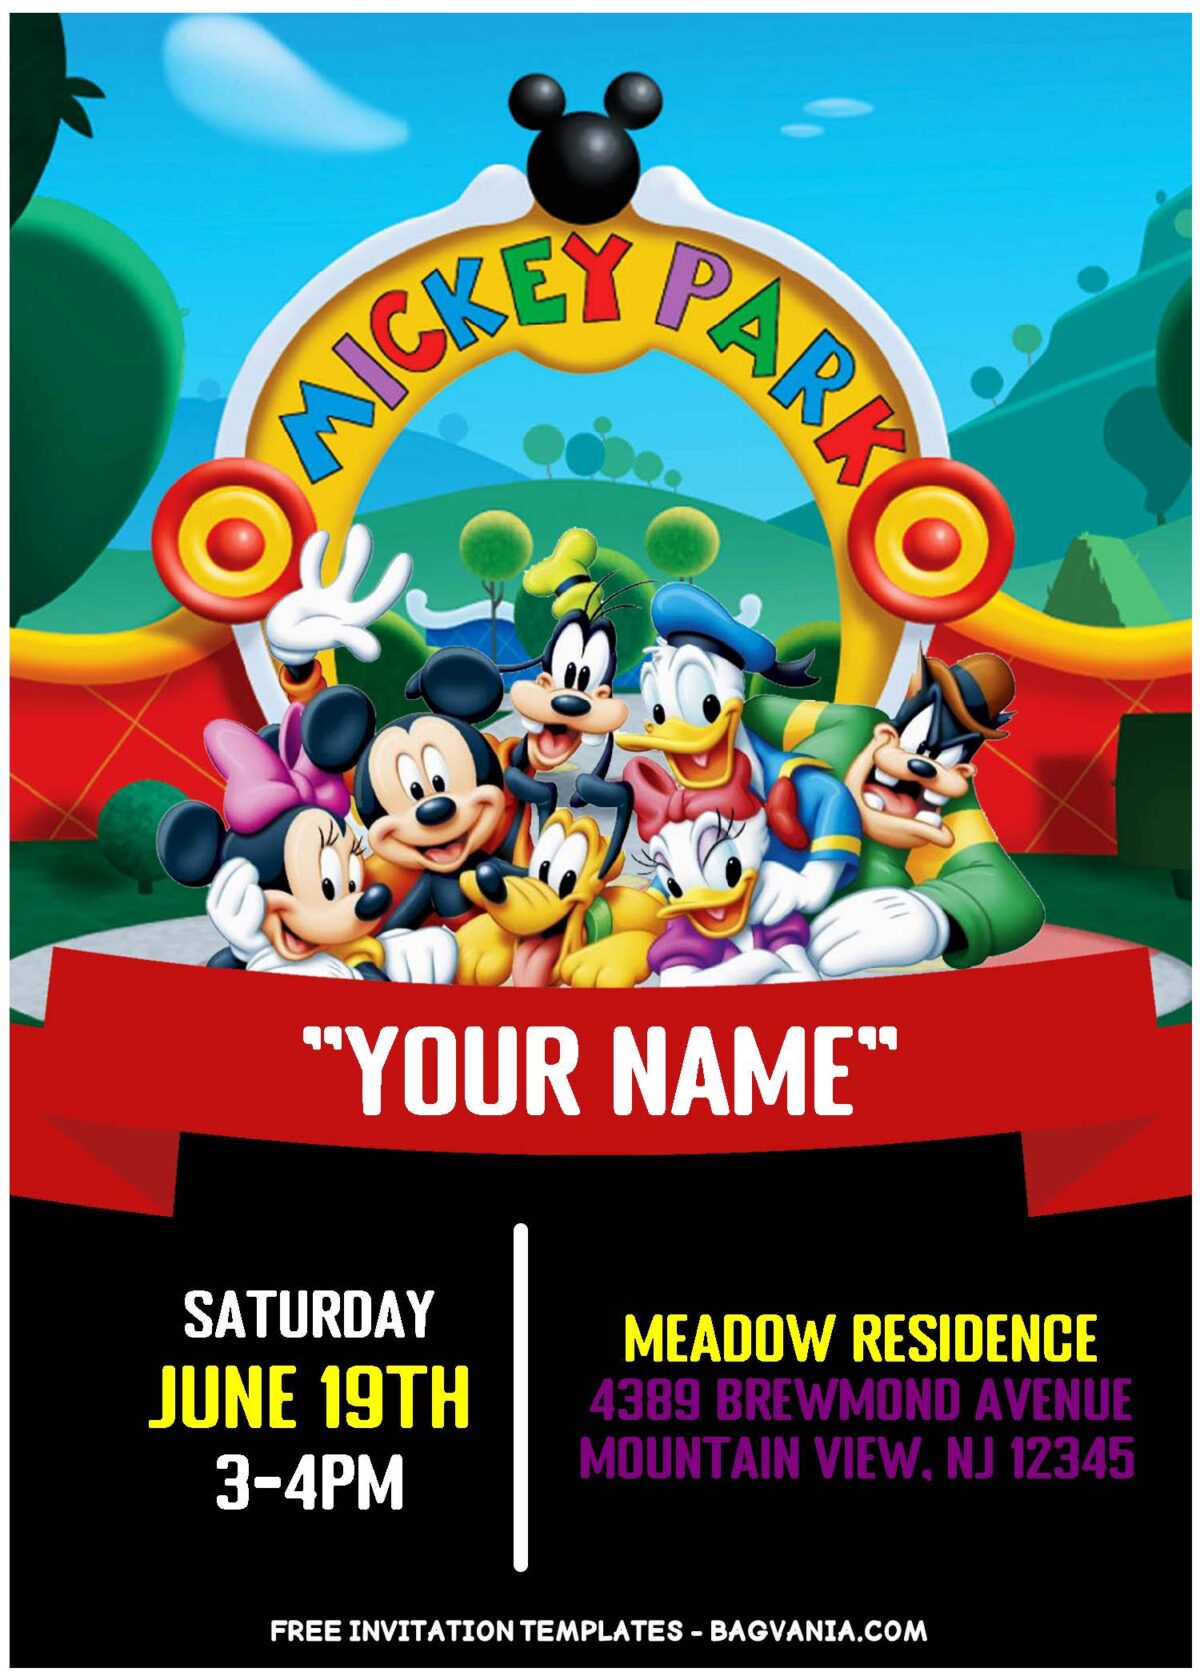 (Free Editable PDF) Adorable Mickey Park Birthday Invitation Templates with Daisy And Donald Duck